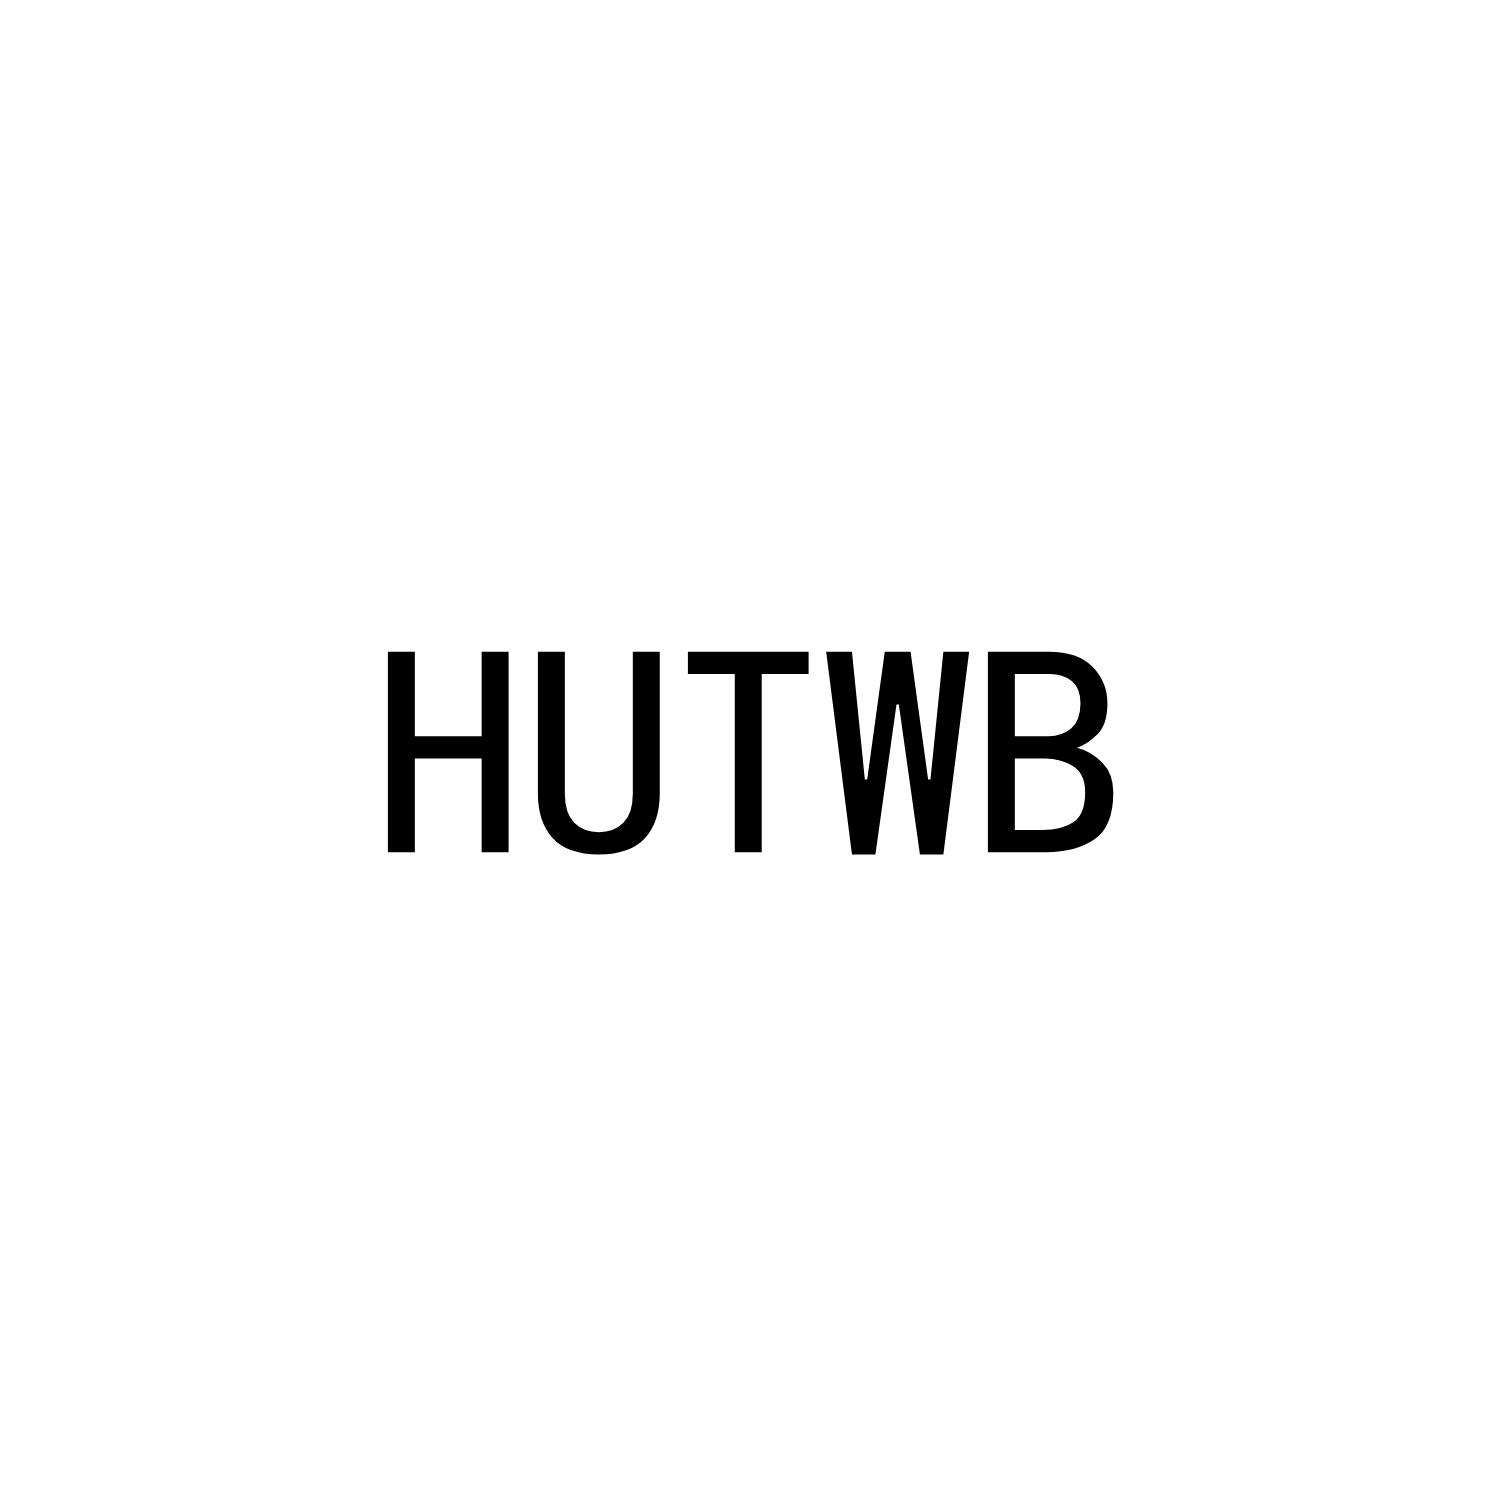 HUTWB